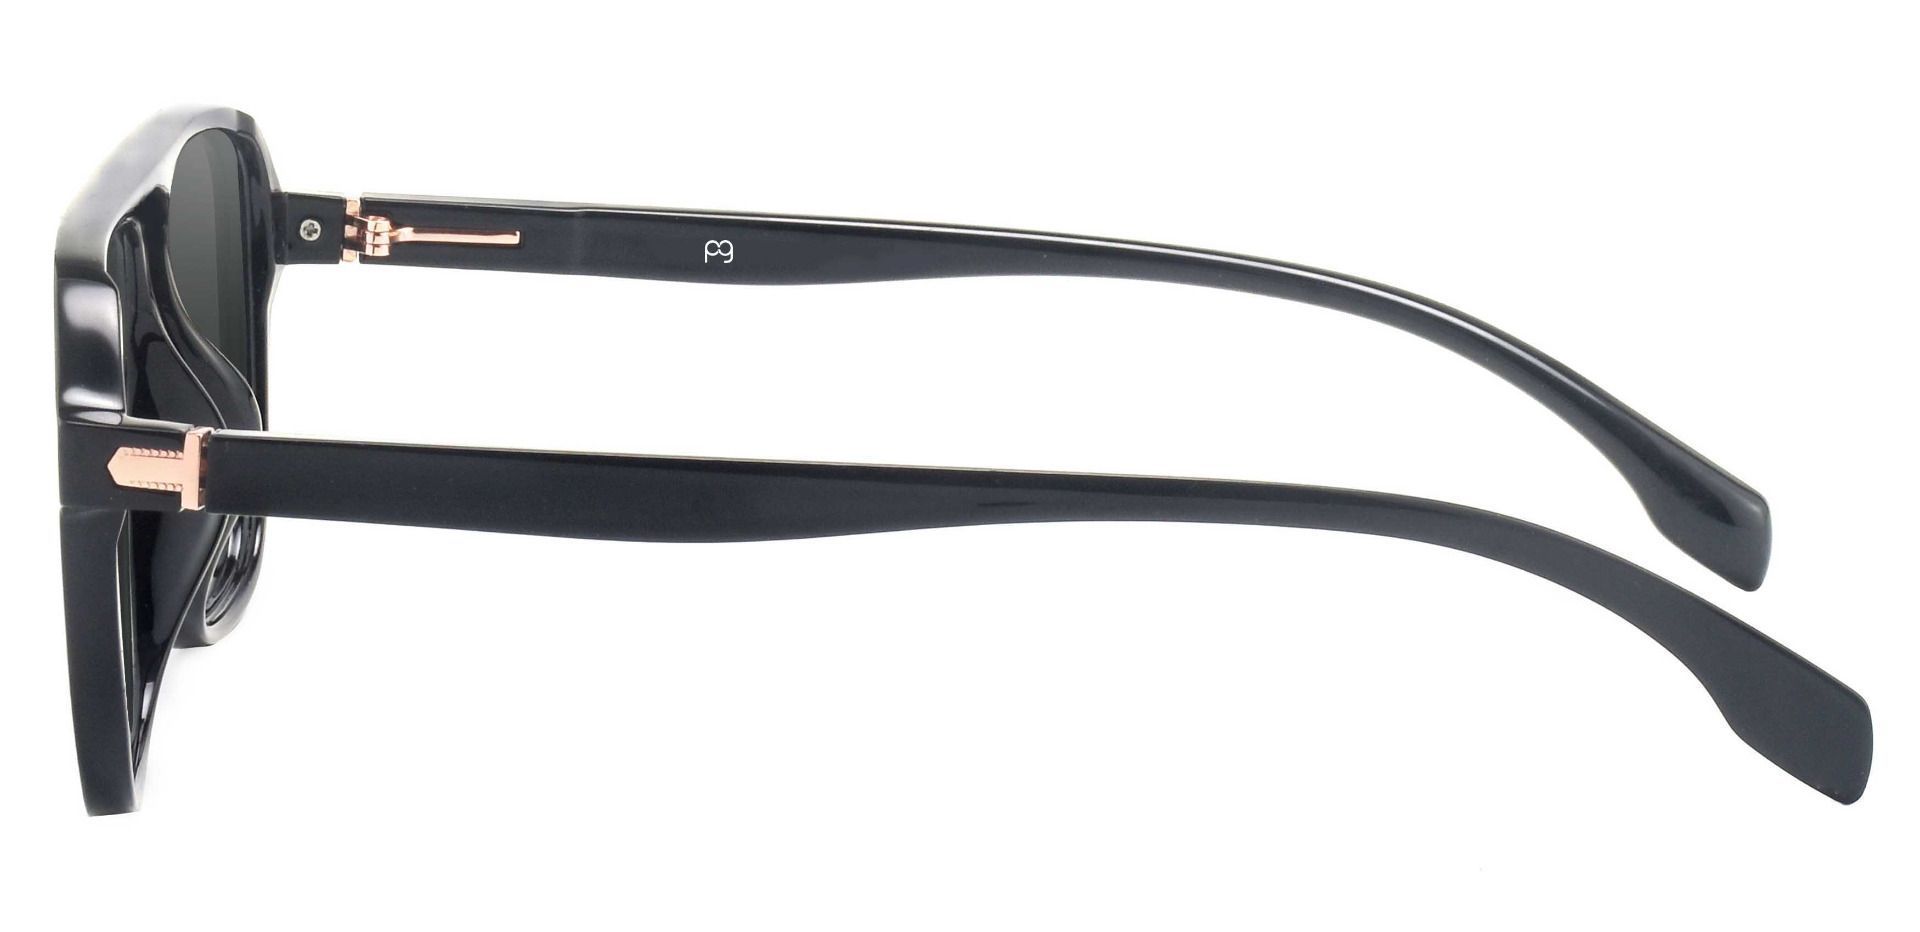 Gideon Aviator Lined Bifocal Sunglasses - Black Frame With Gray Lenses